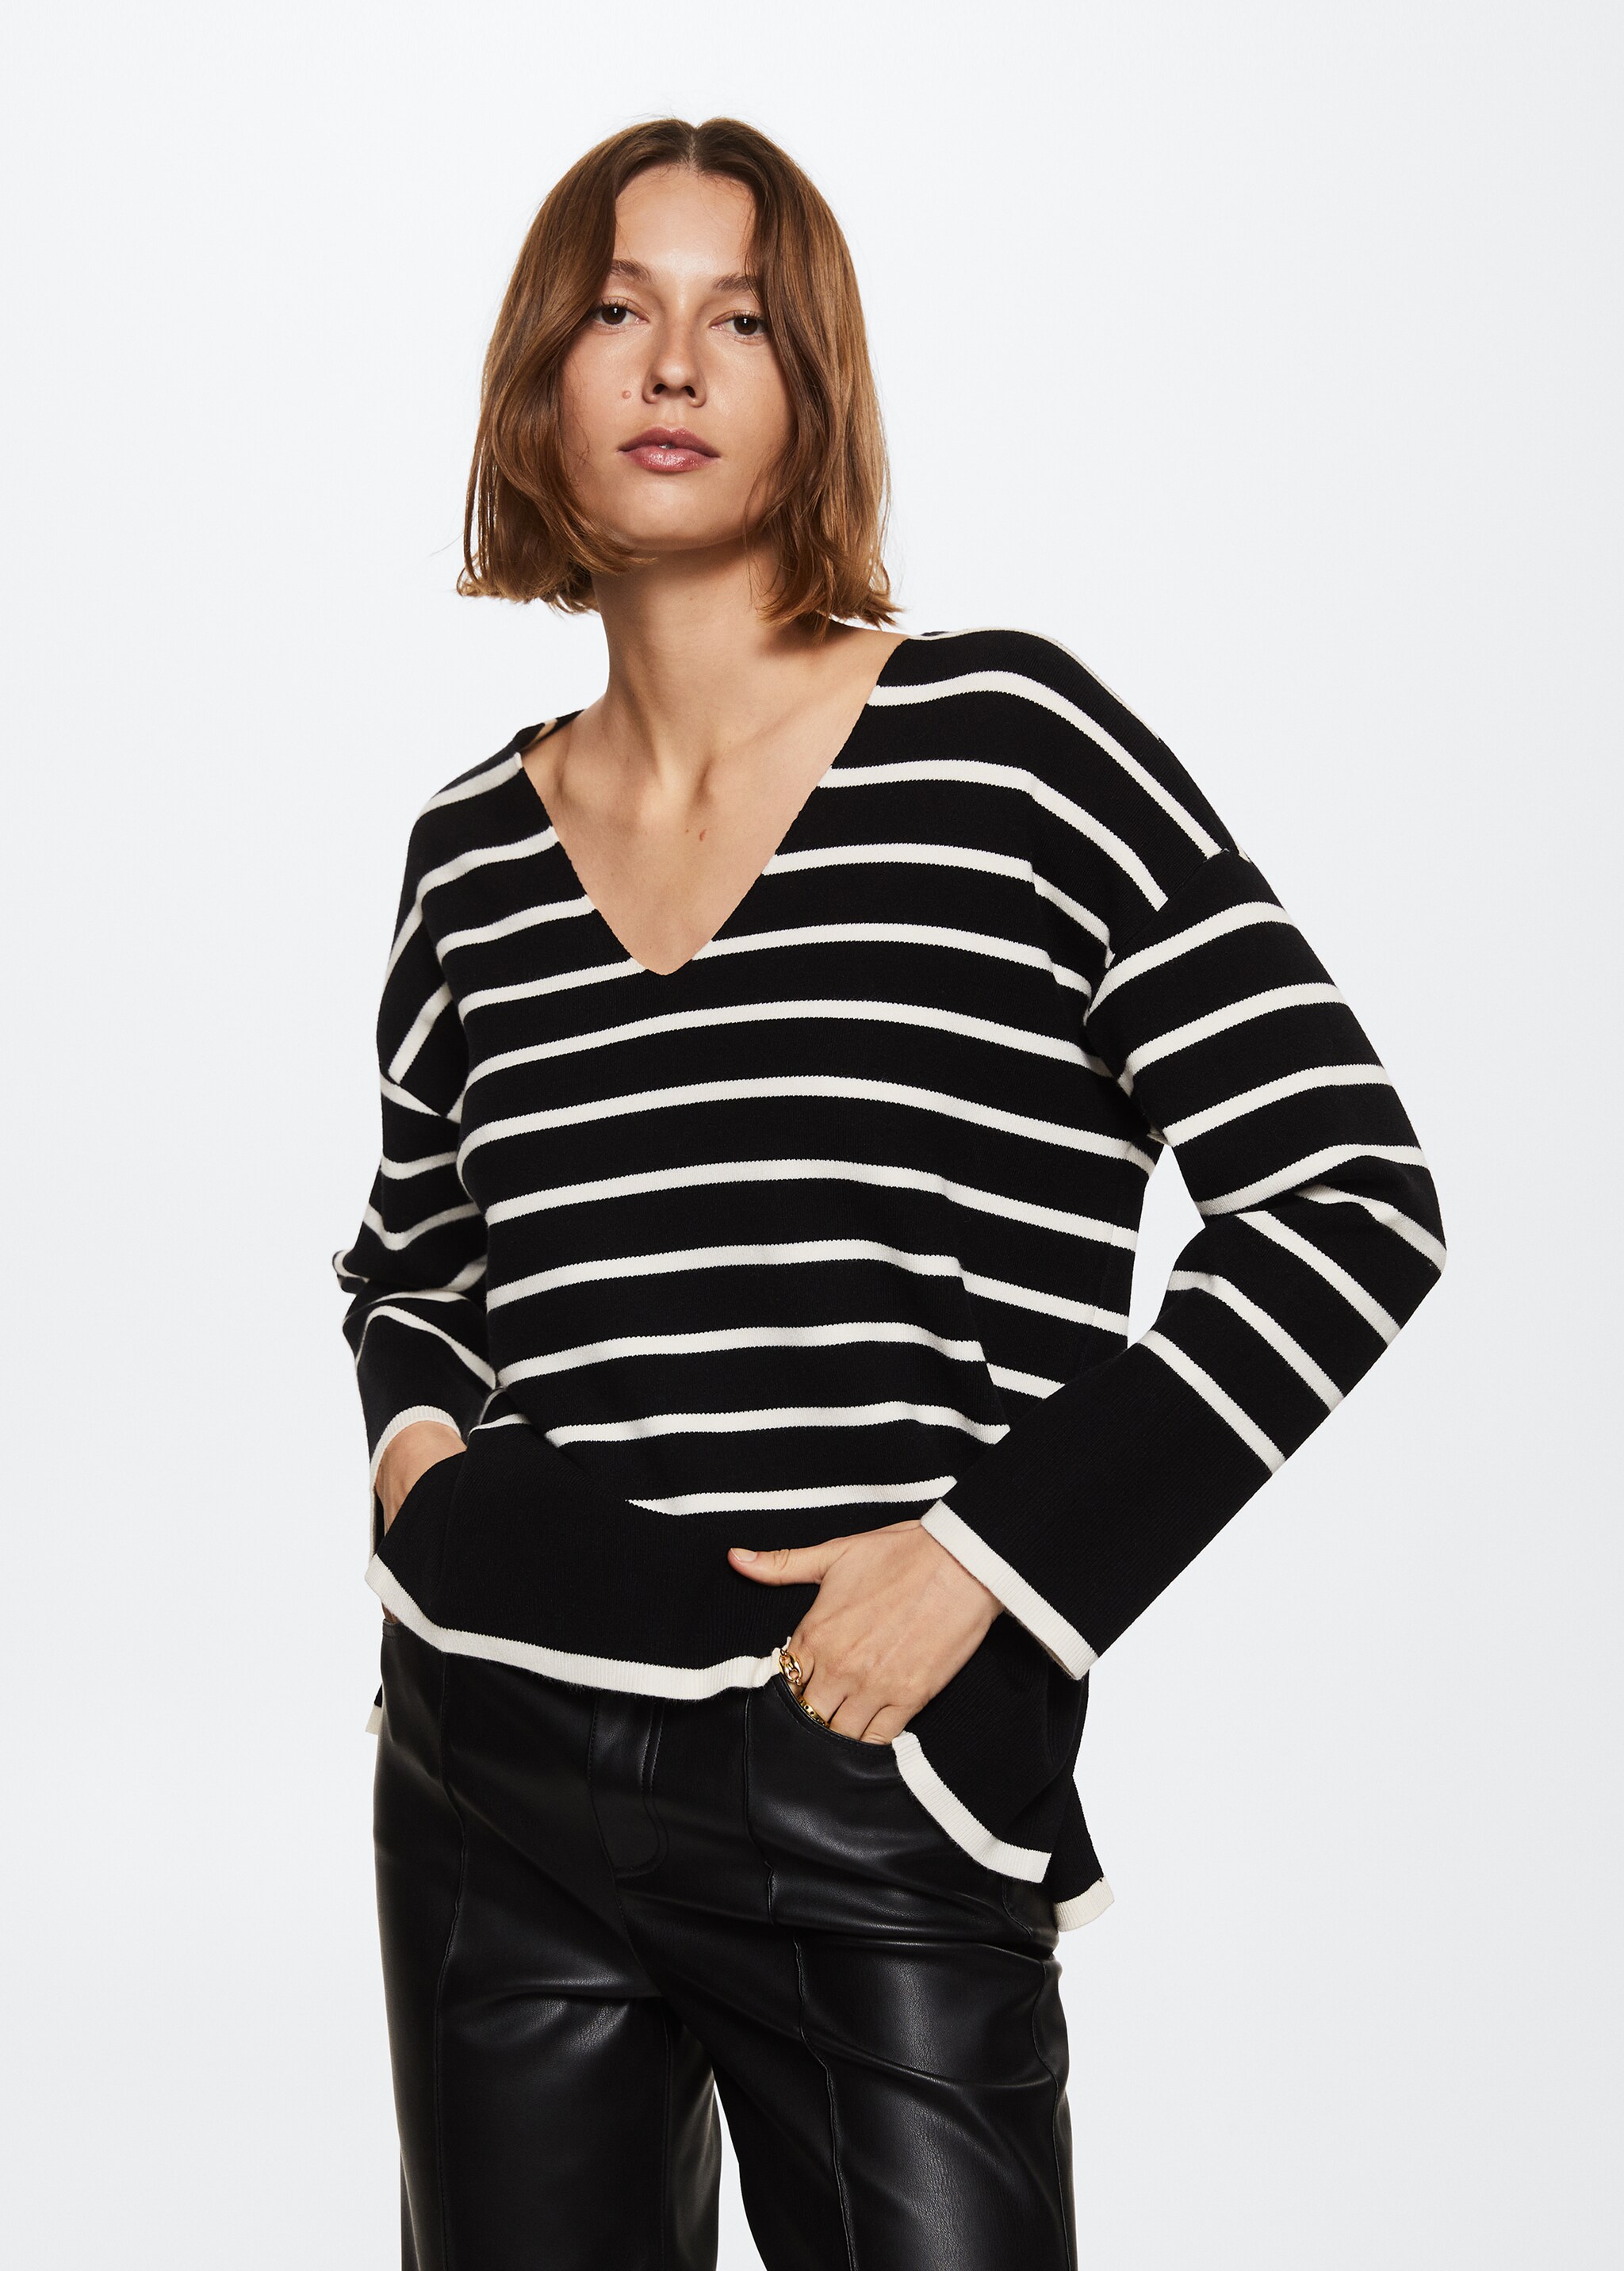 Oversized striped sweater - Medium plane